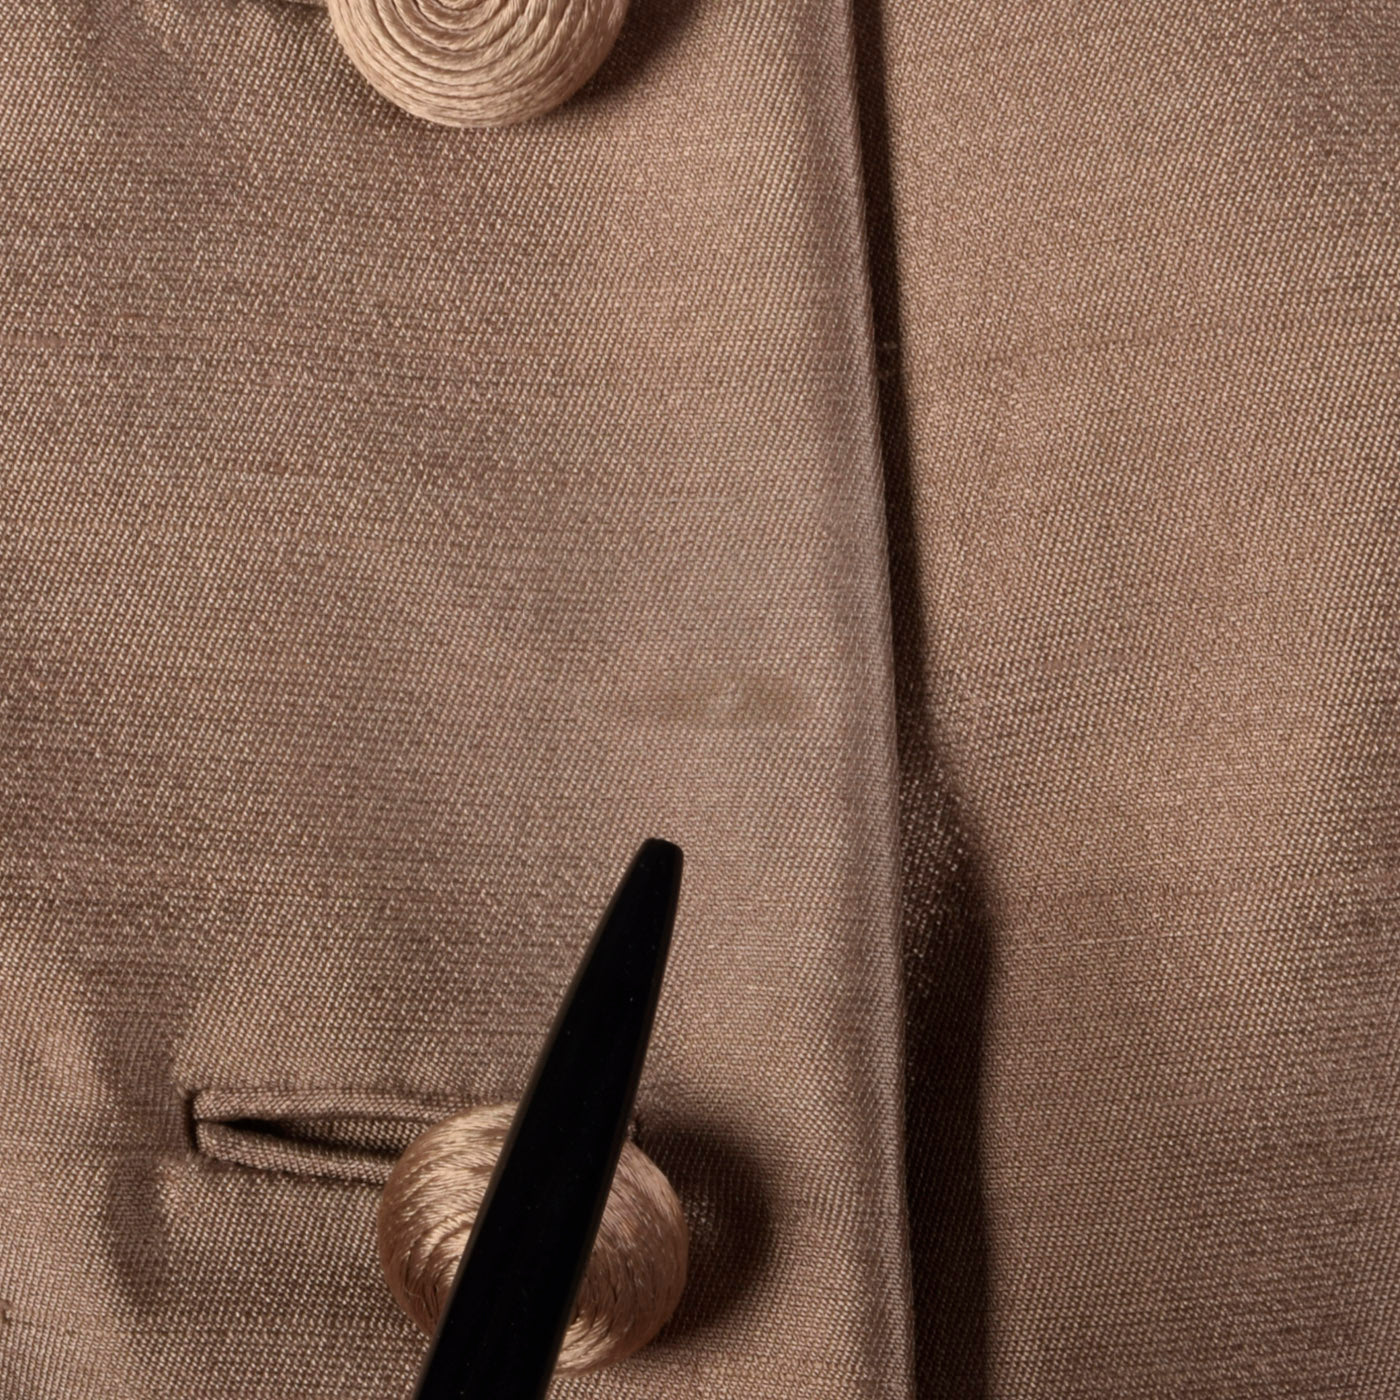 1960s Brown Silk Jacket with Fur Collar